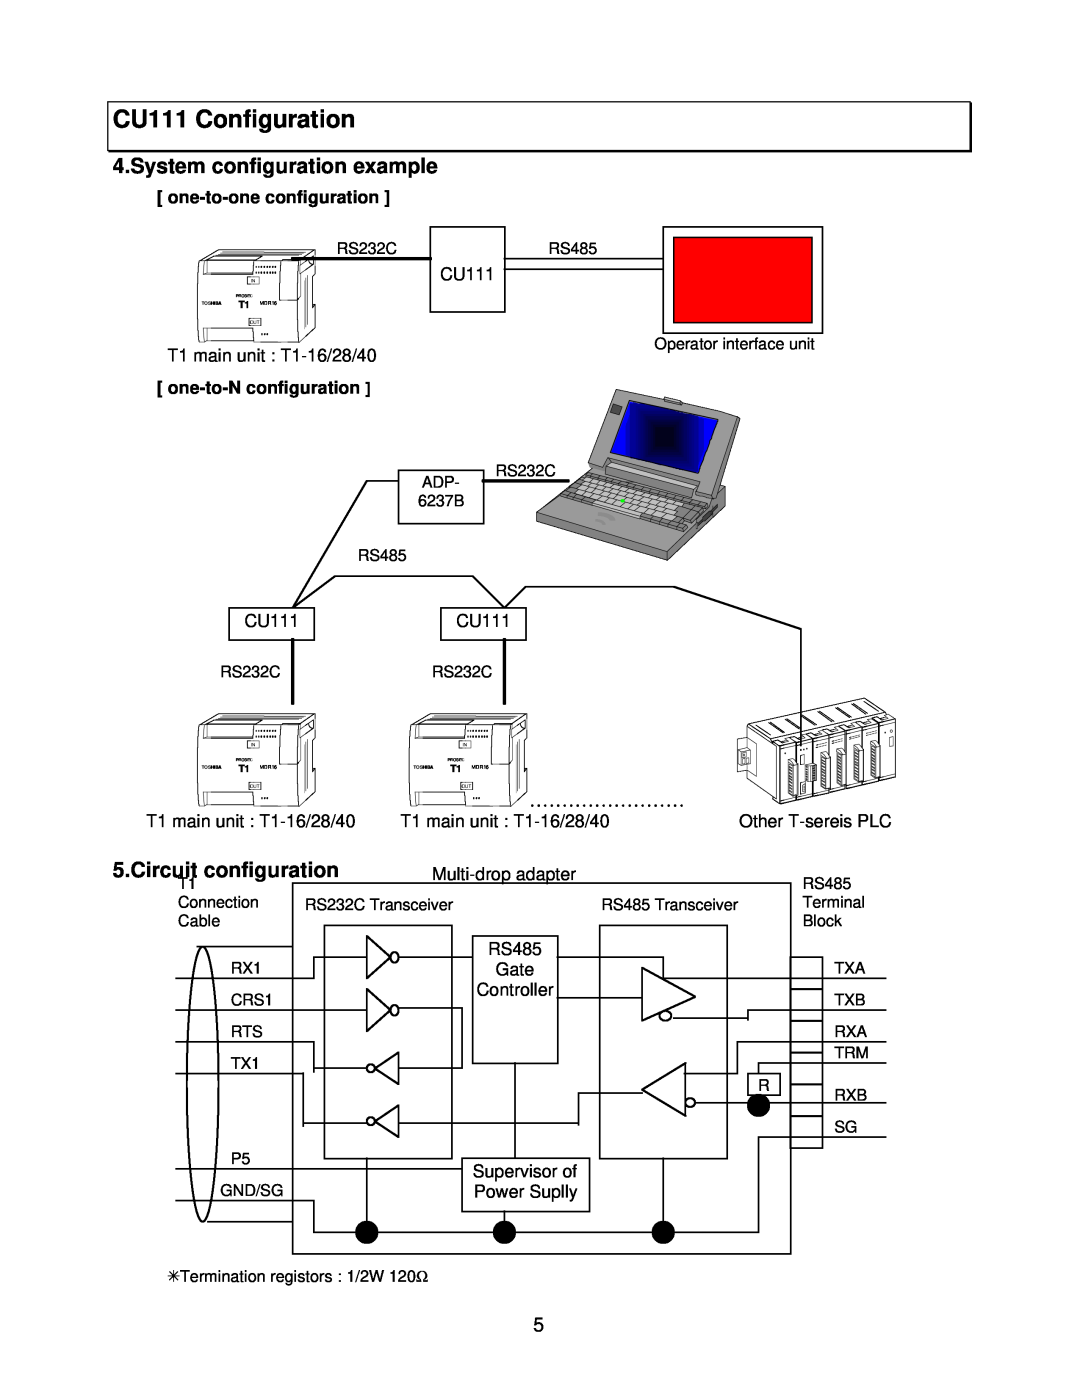 Toshiba RS-485 CU111 Configuration, System configuration example, Circuit configuration, ¼¼¼¼¼¼¼¼, one-to-N configuration 